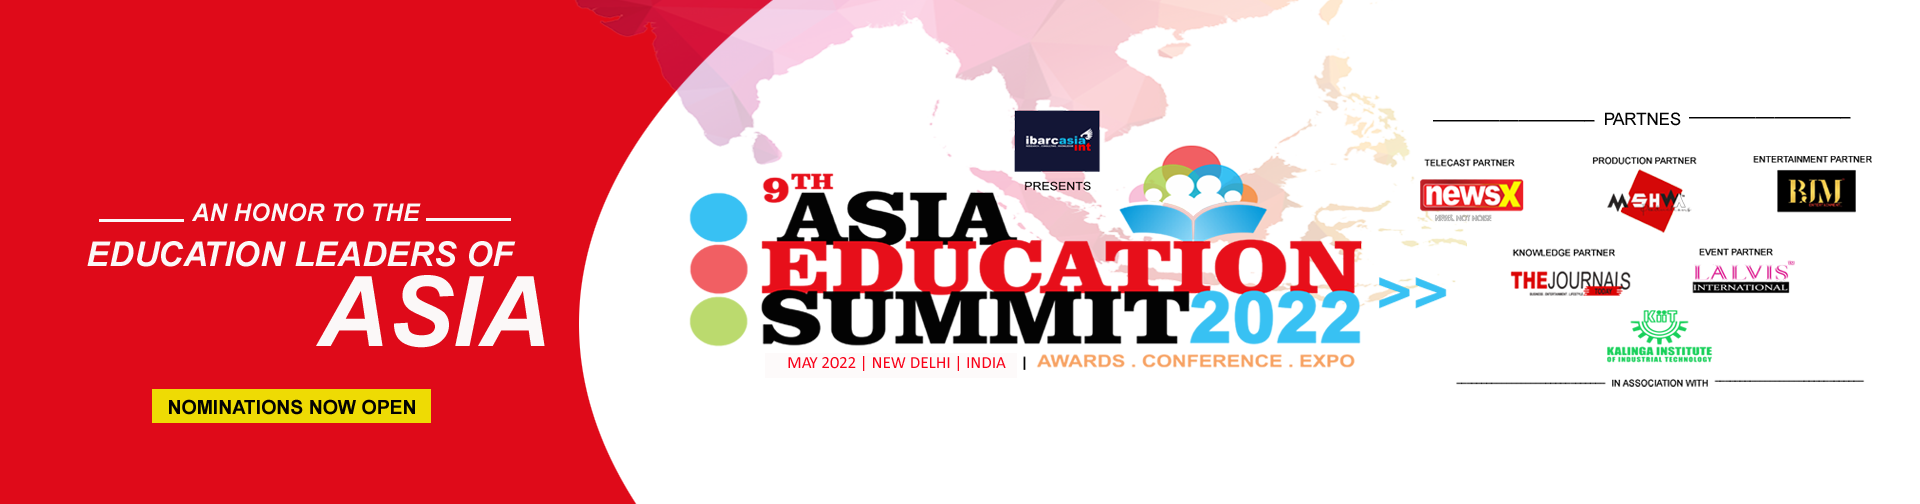 Asia Education Summit Ibarc Asia